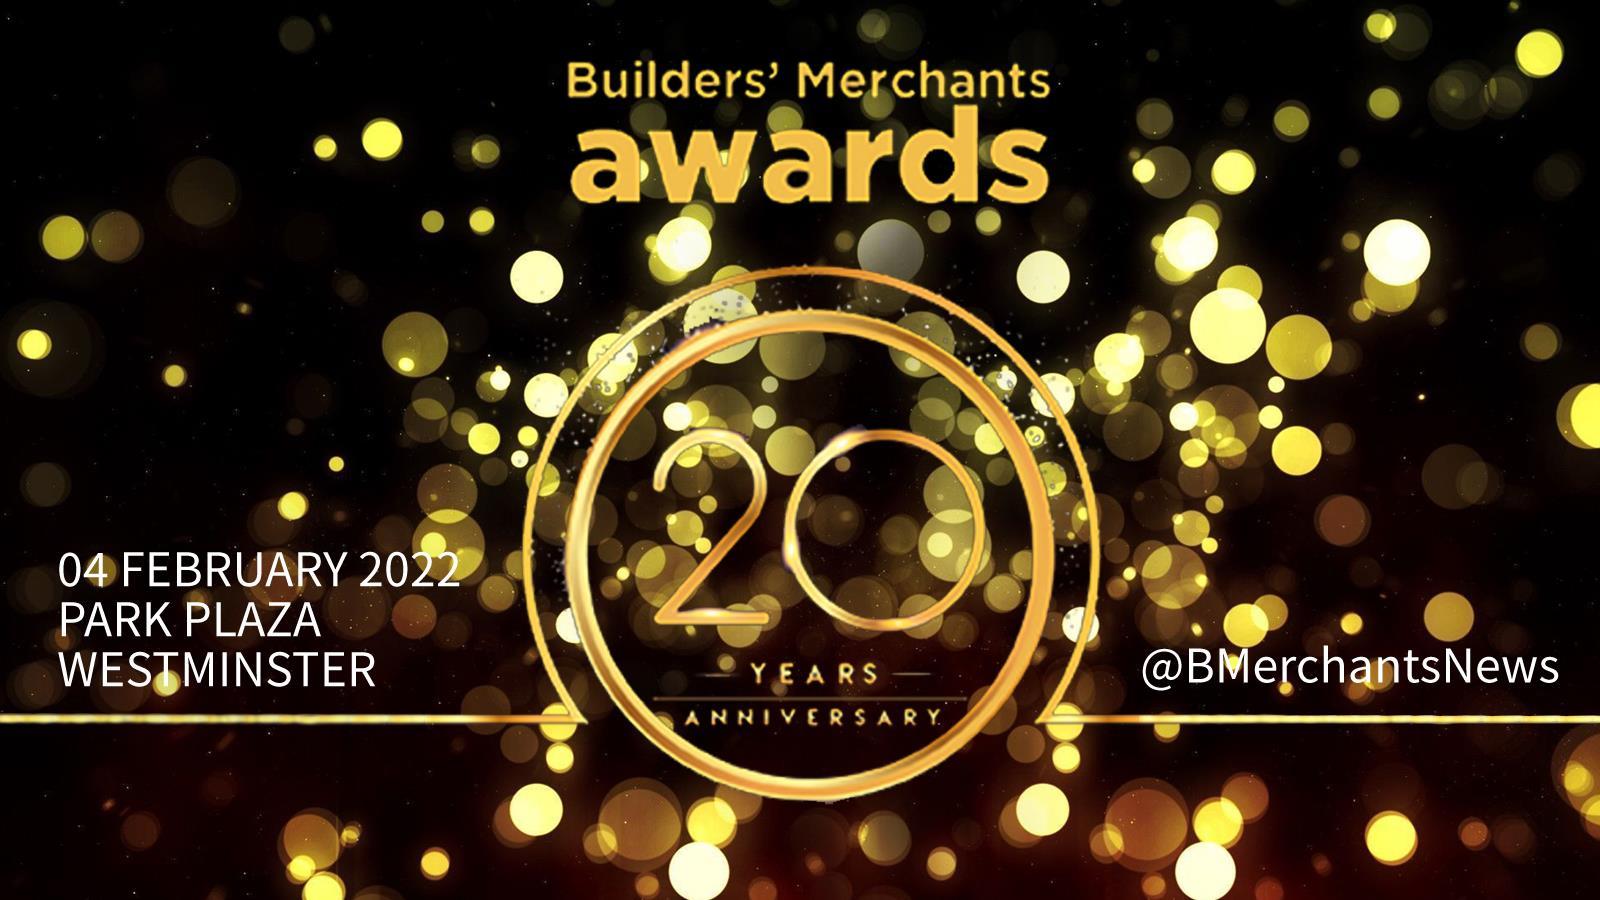 Builders' Merchants Awards 20th anniversary image